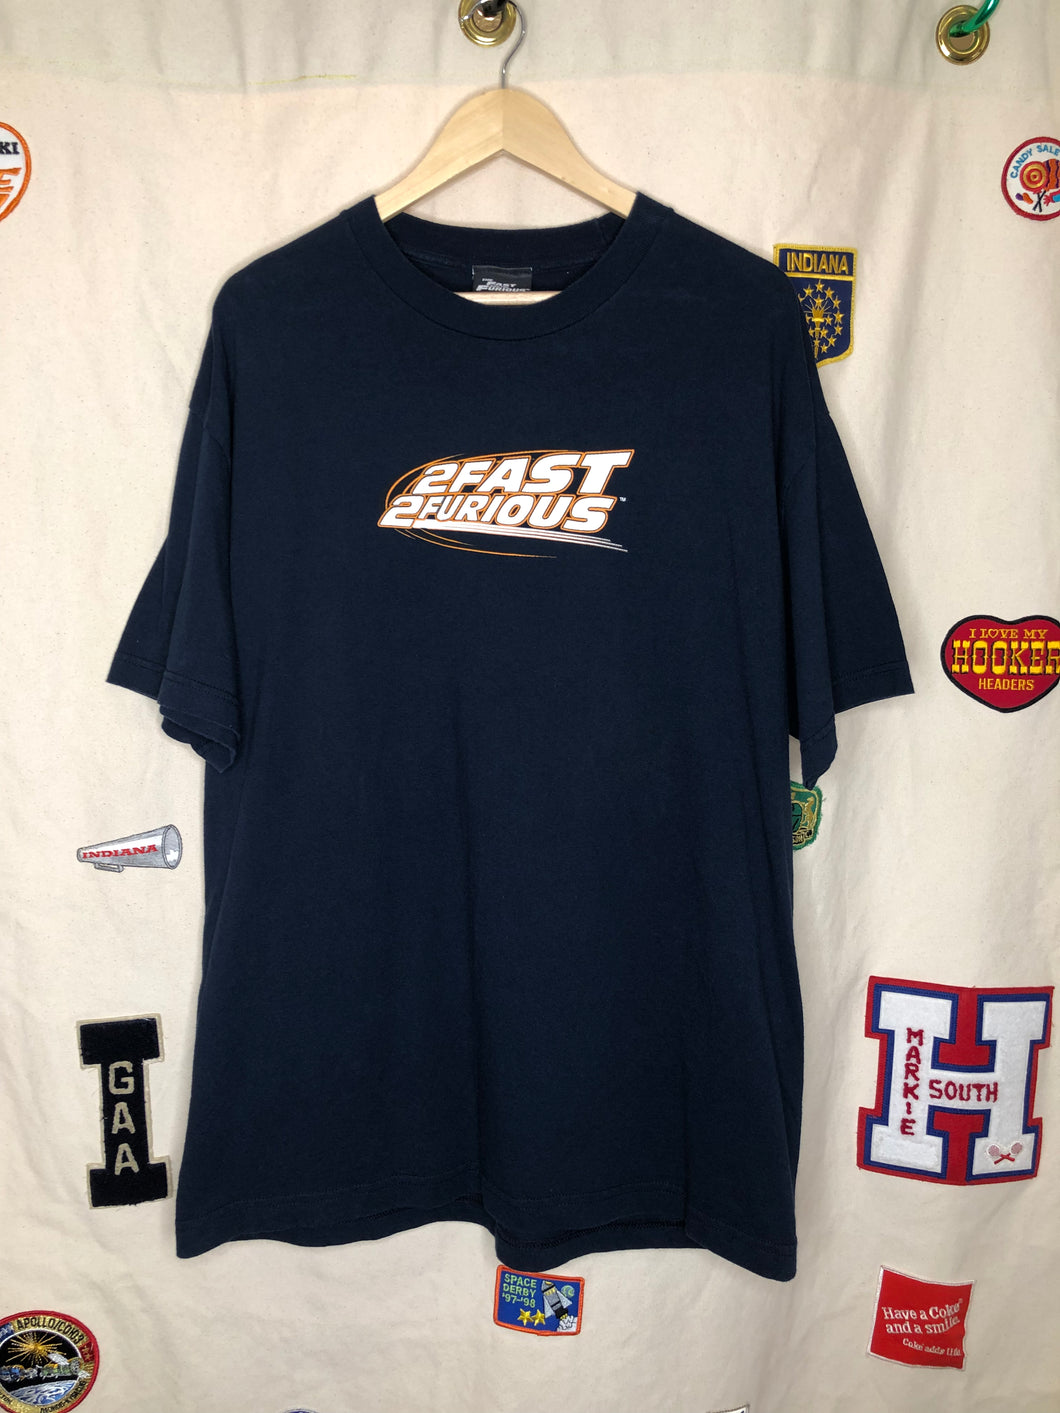 2 Fast 2 Furious Juice Burner Navy Movie T-Shirt: XL